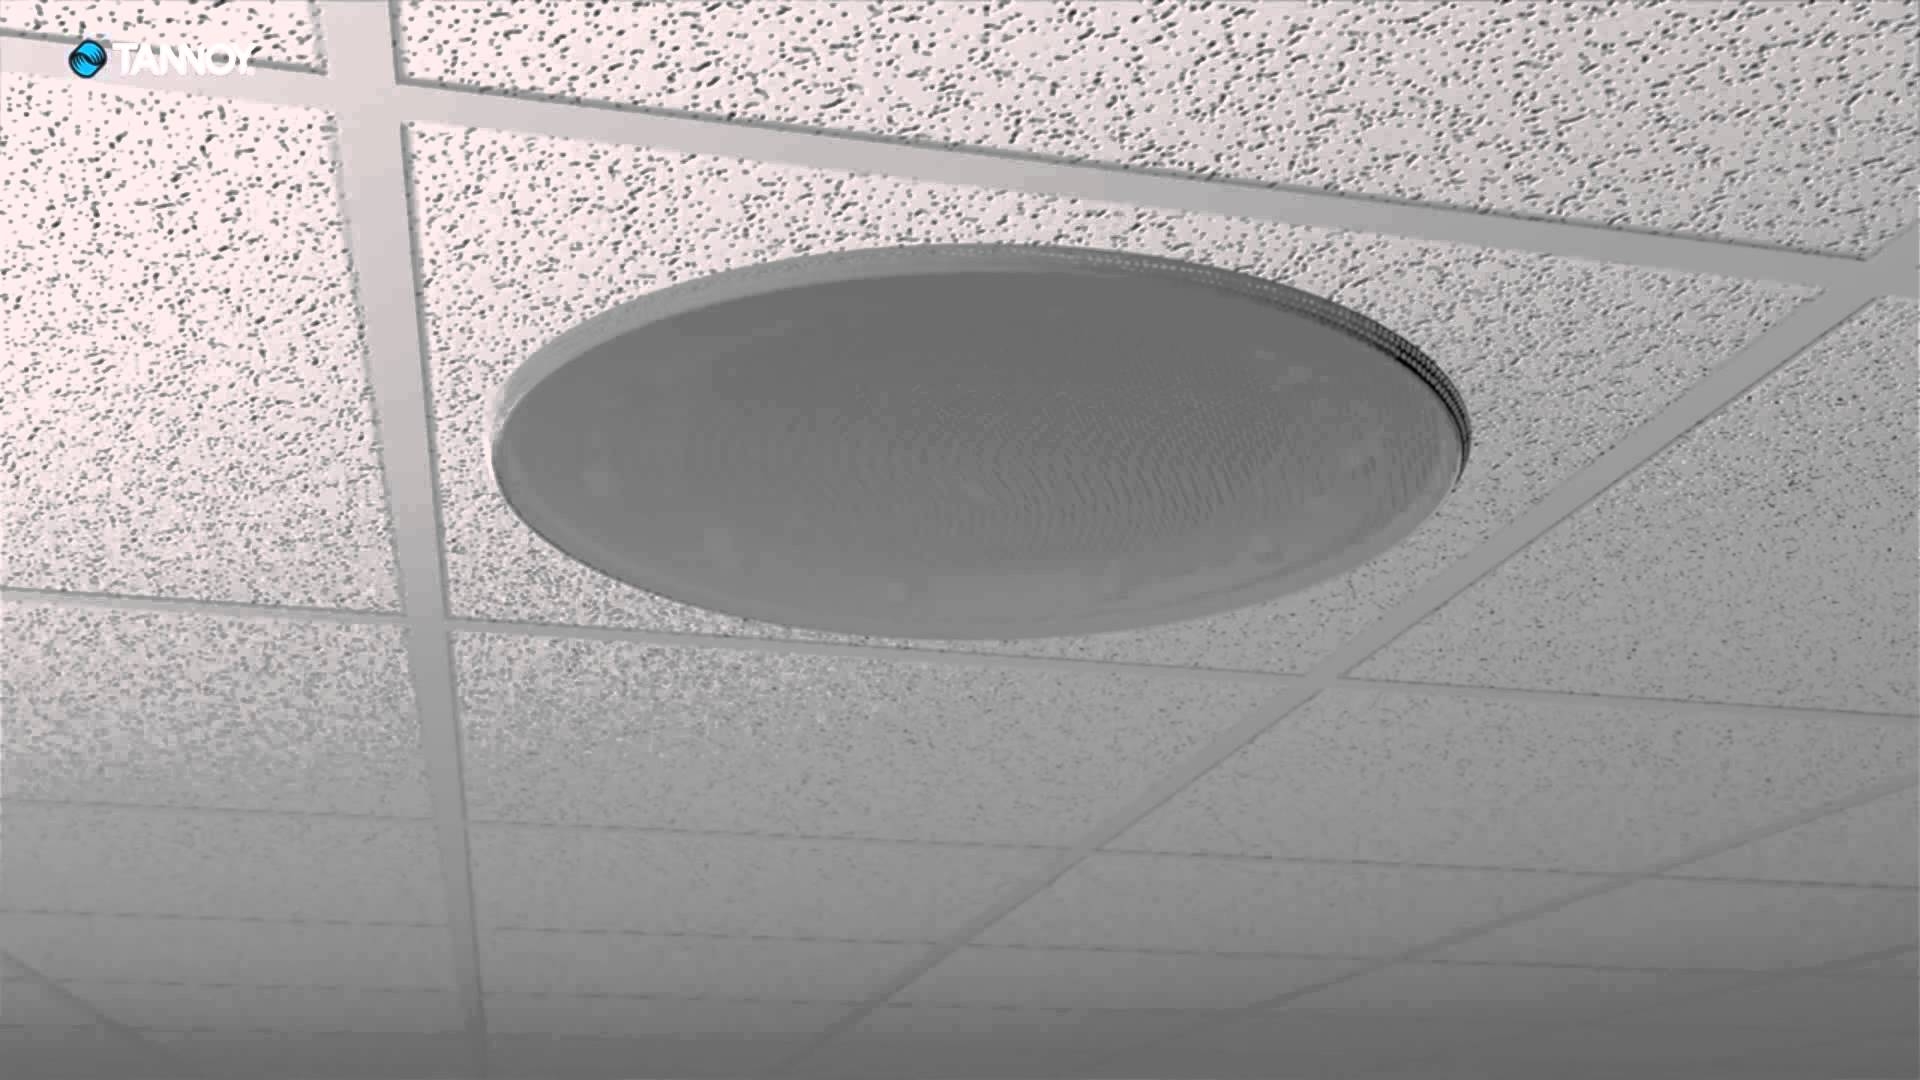 Ceiling Tile Speaker Grill Ceiling Tile Speaker Grill infocomm 2015 2 tannoy ceiling speakers new clamp arco grille 1920 X 1080